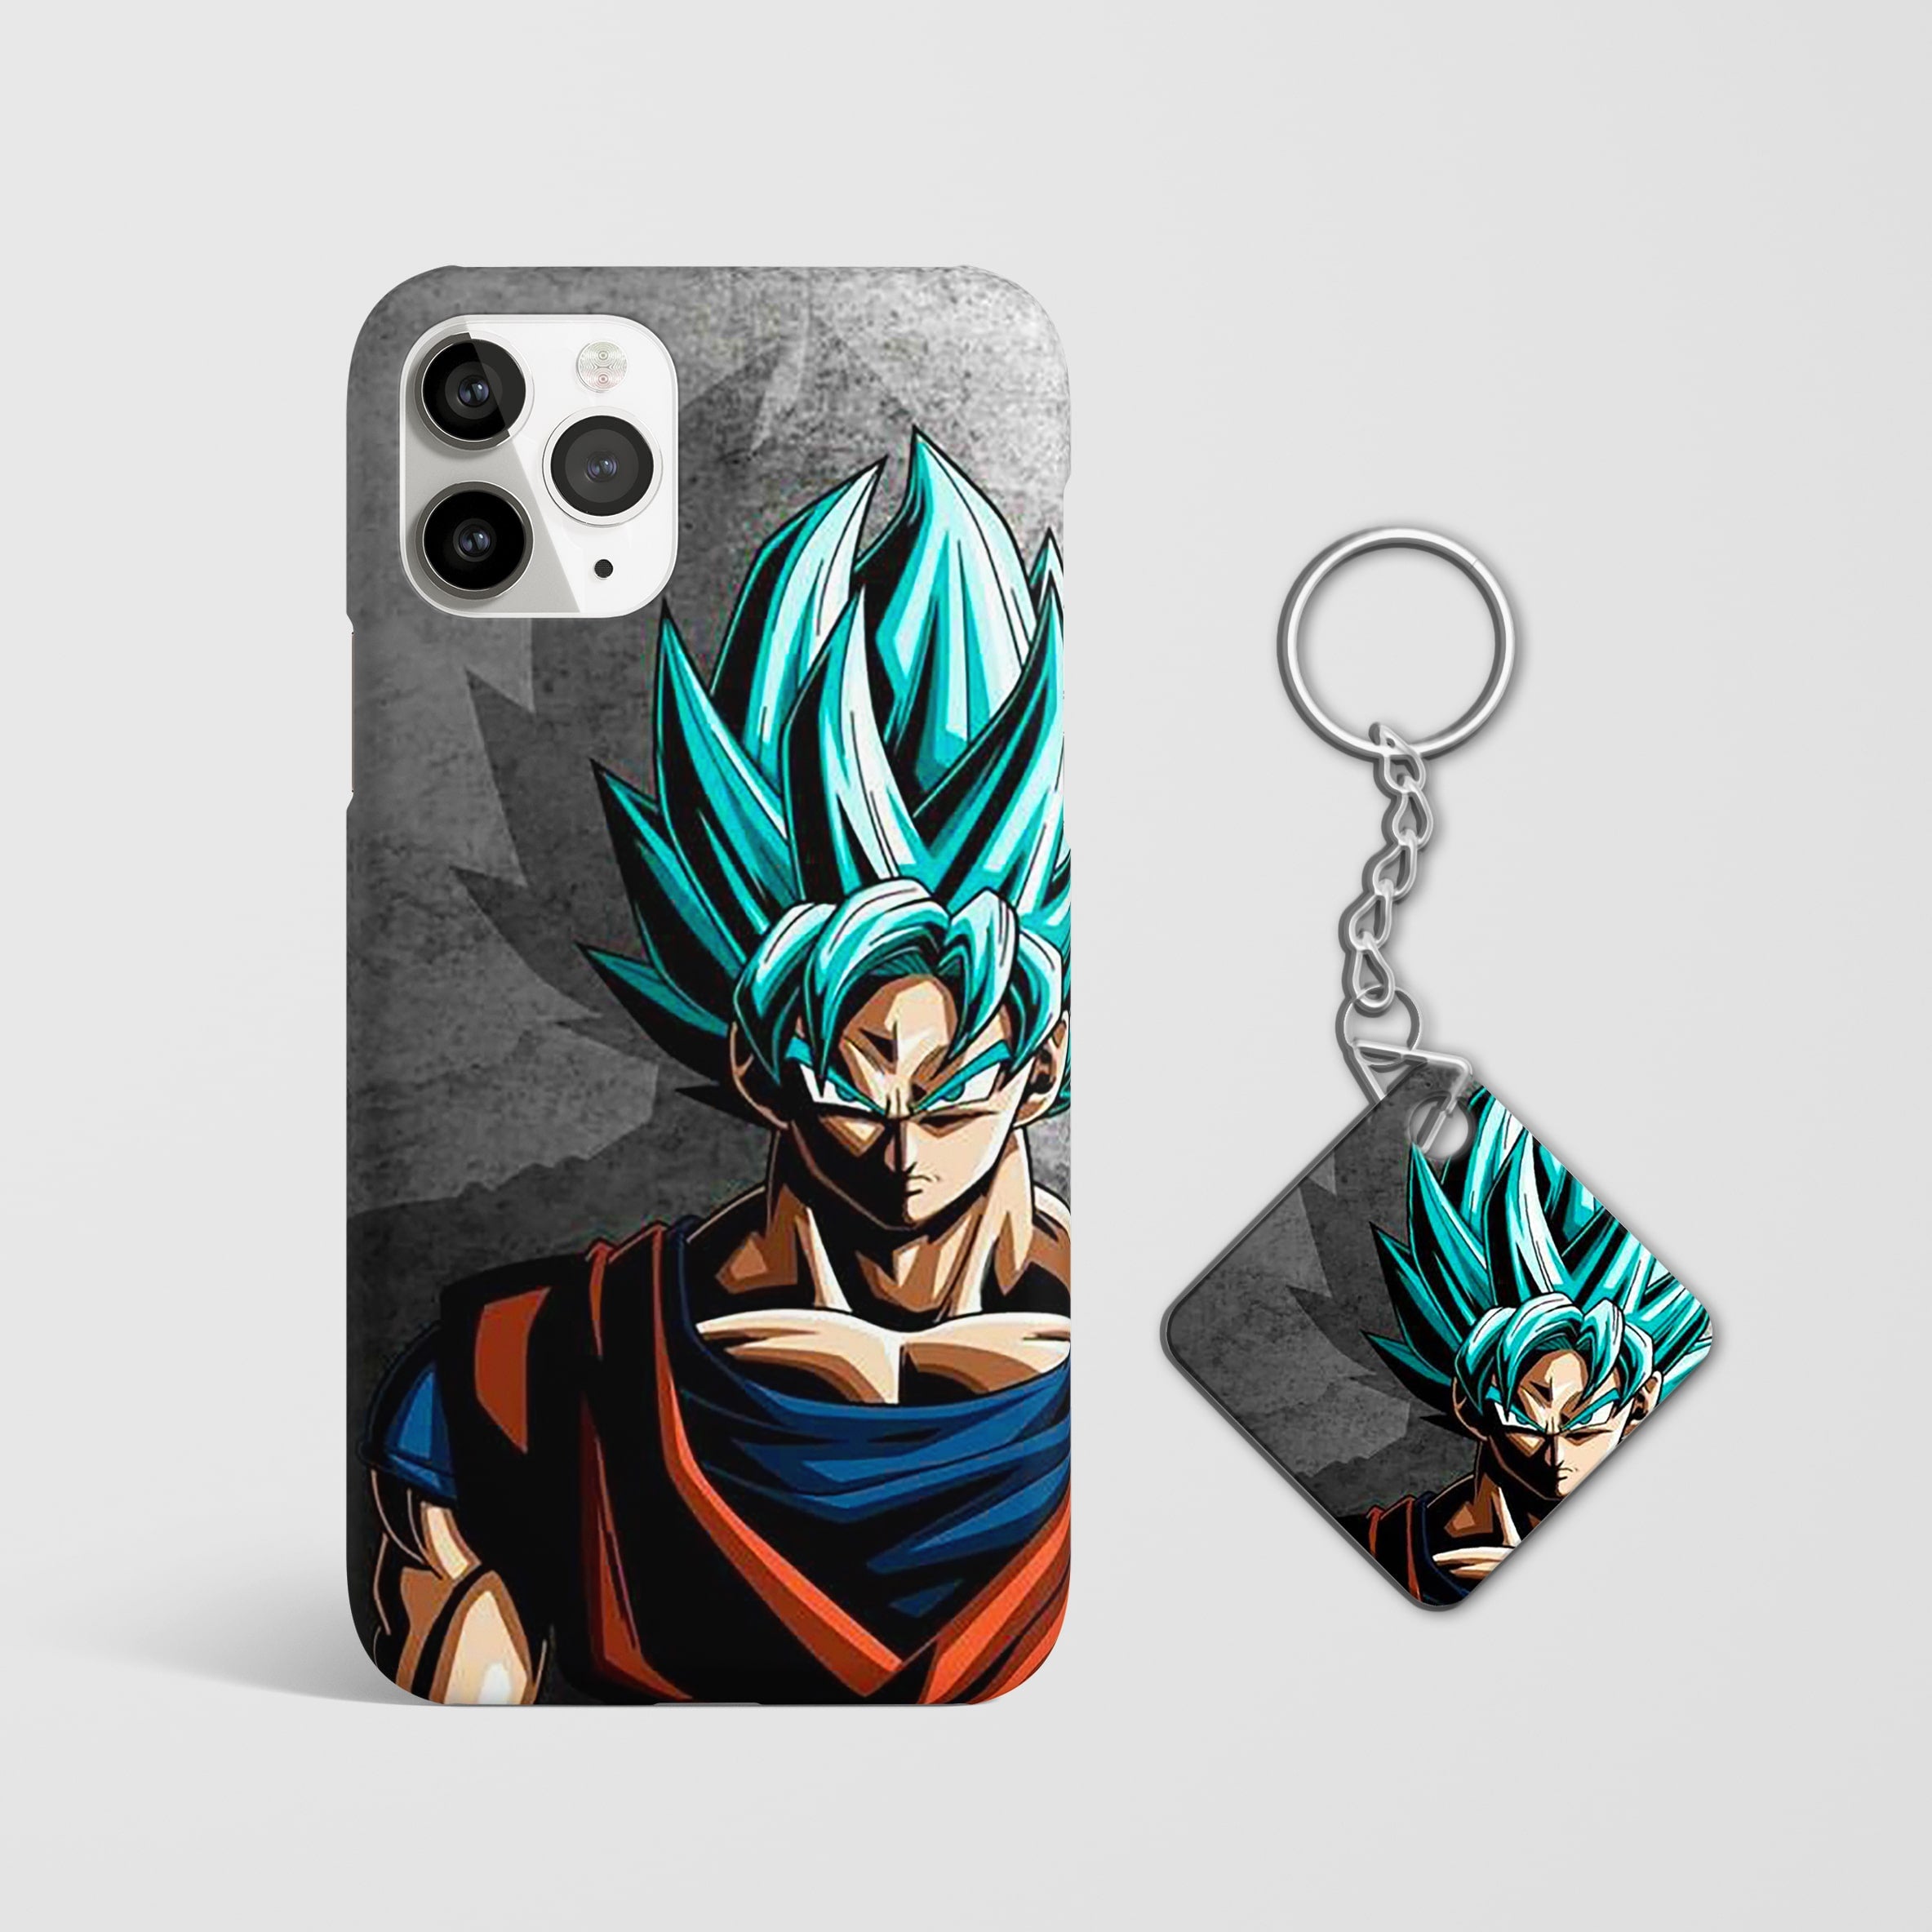 Goku Super Saiyan Phone Cover with Keychain